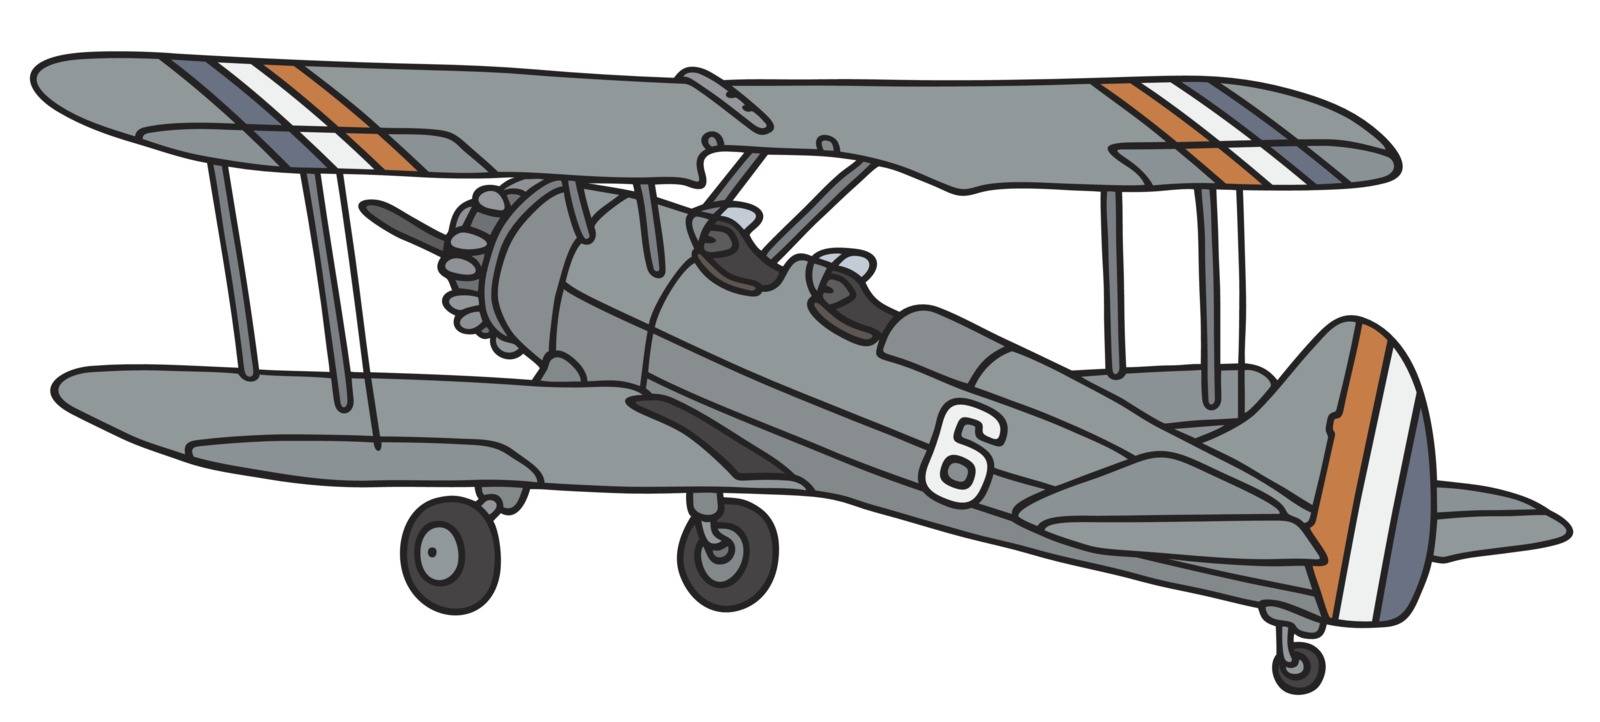 Gray biplane by vostal